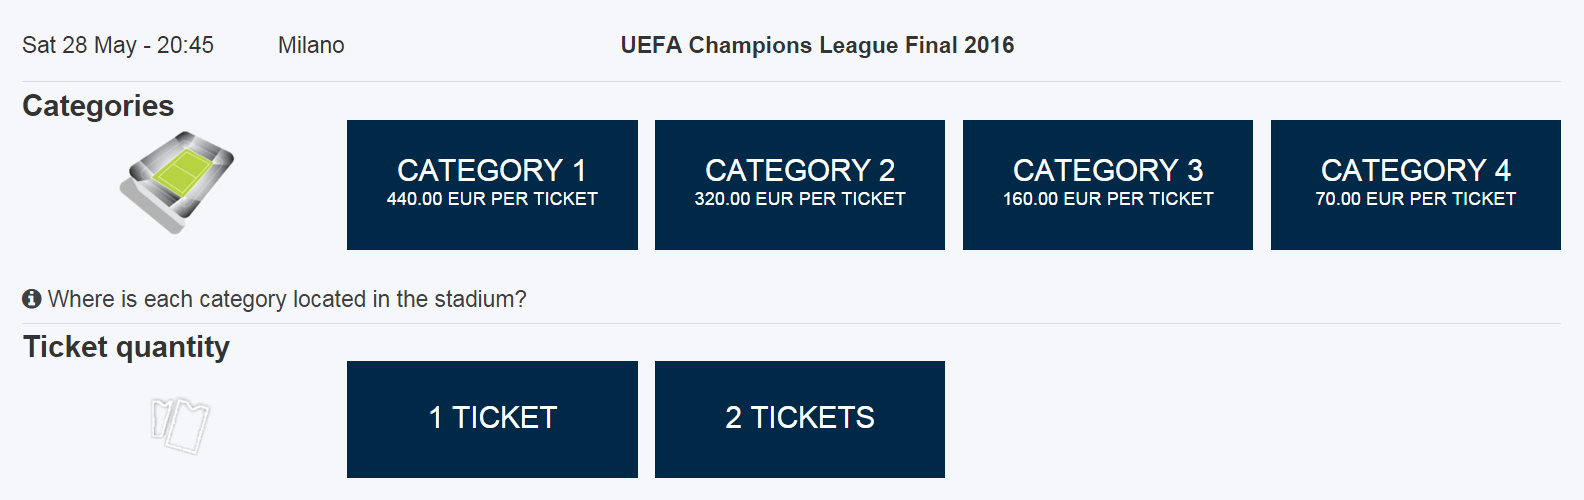 https://championsleague.tickets.uefa.com/lottery/welcome_en.html